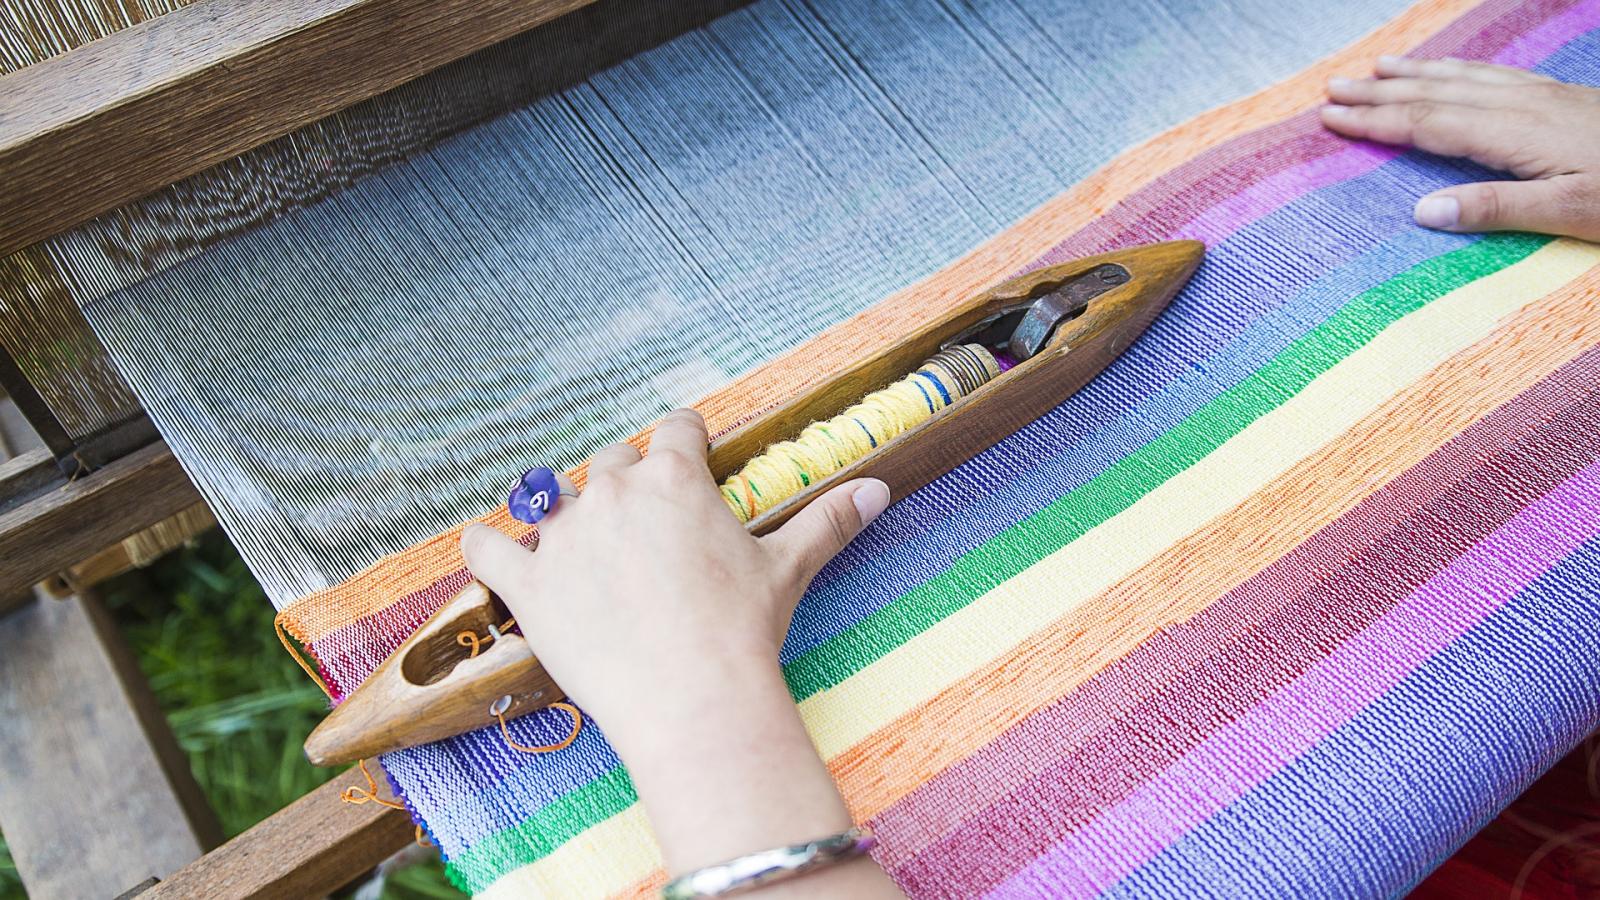 Weaving loom via Pixabay